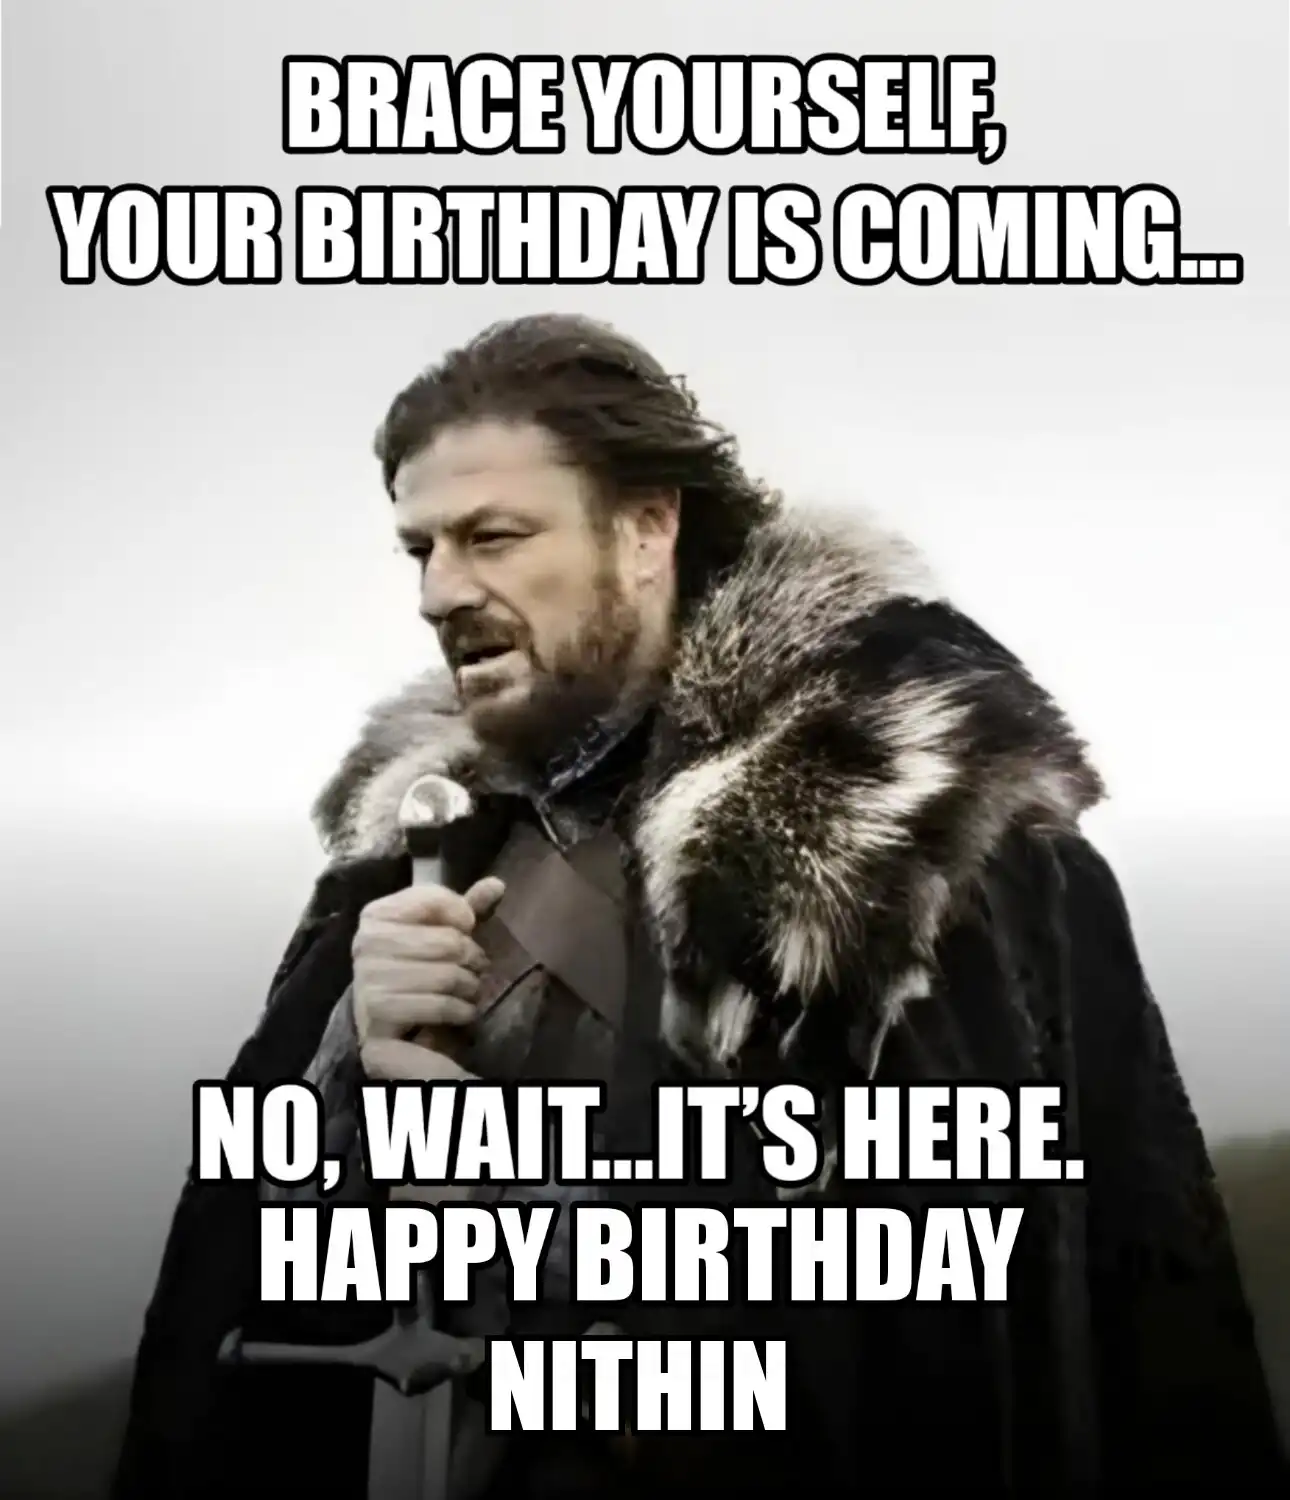 Happy Birthday Nithin Brace Yourself Your Birthday Is Coming Meme